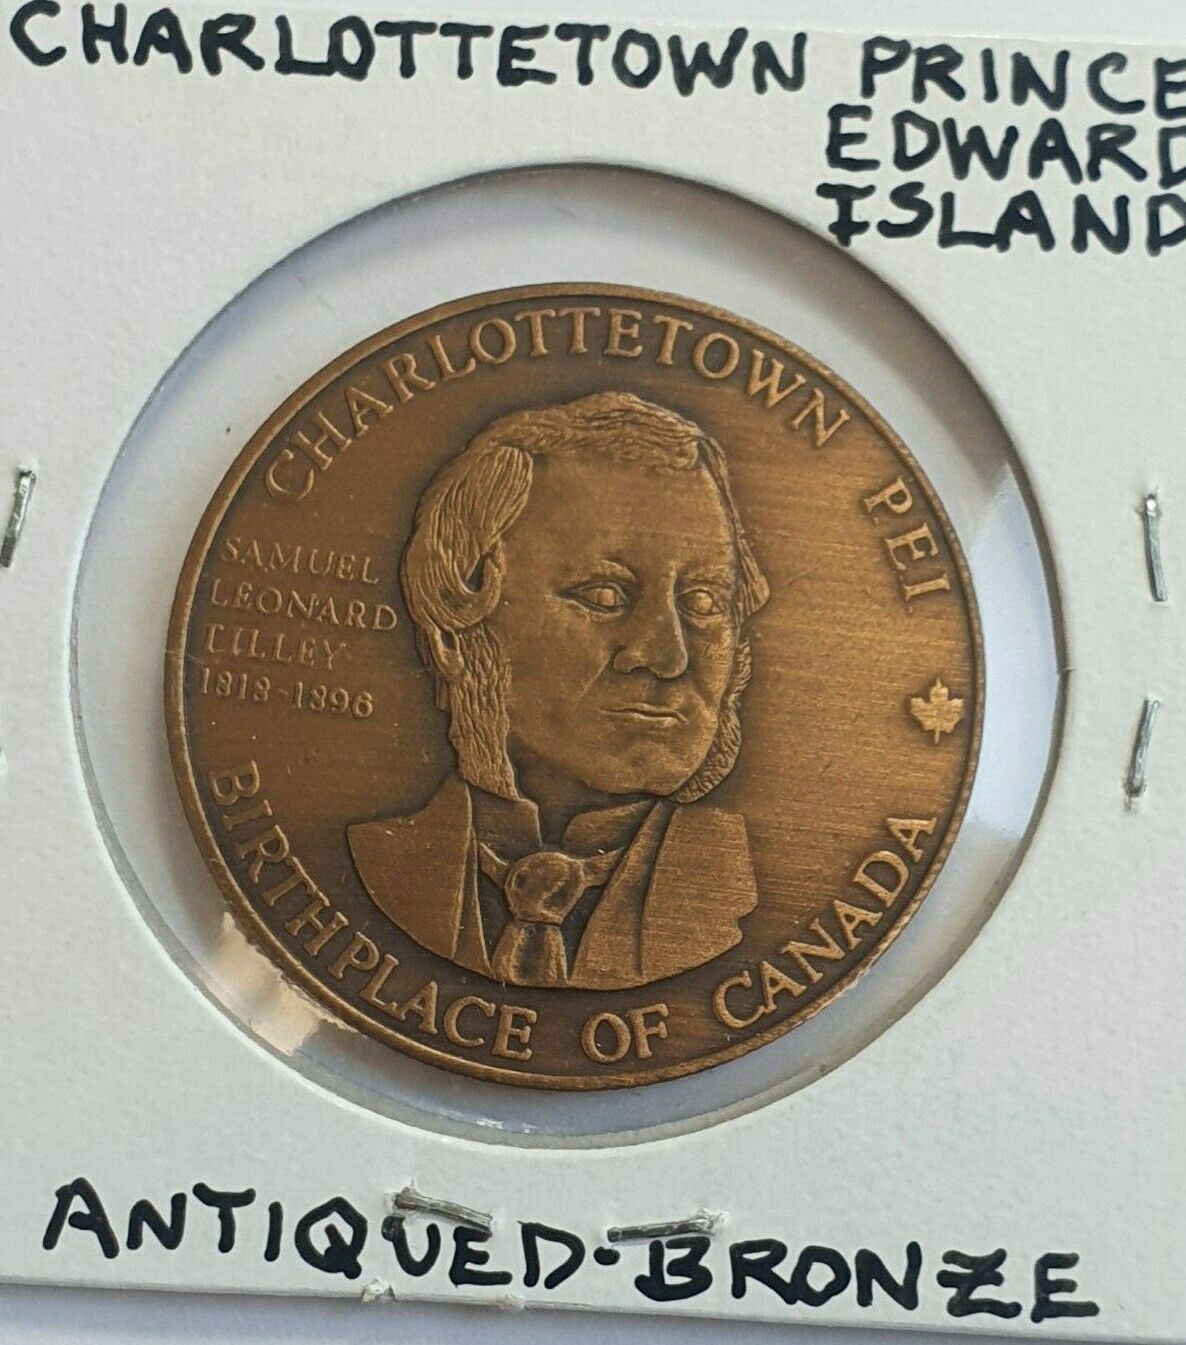 1981 Charlottetown P.e.i $1 Samuel Leonard Lilley Token Proof Like Mintage = 150